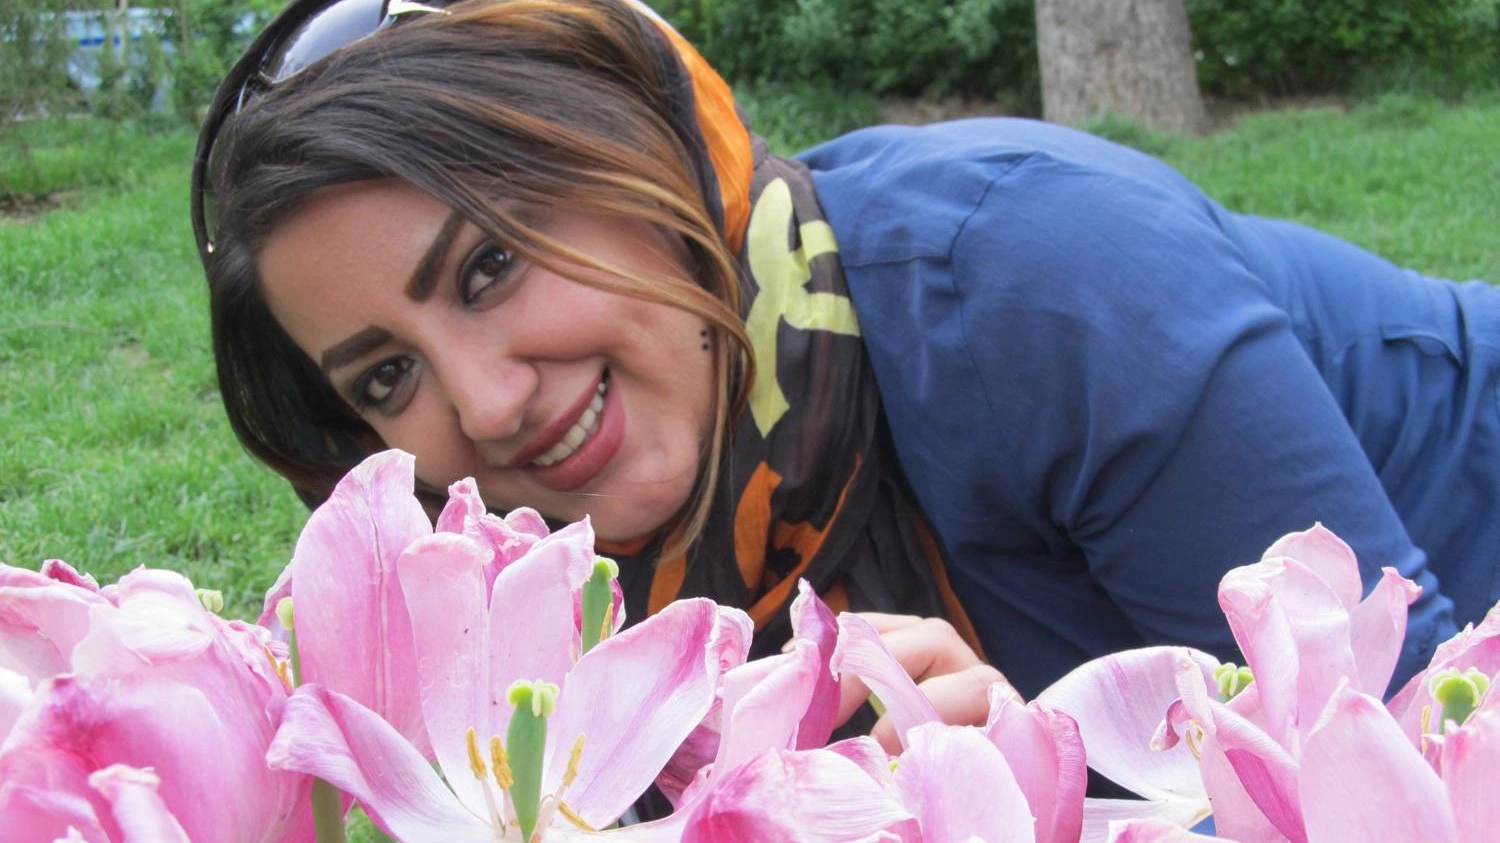 Mahtab Savoji, ragazza iraniana di 29 anni uccisa da una ragazza indiana